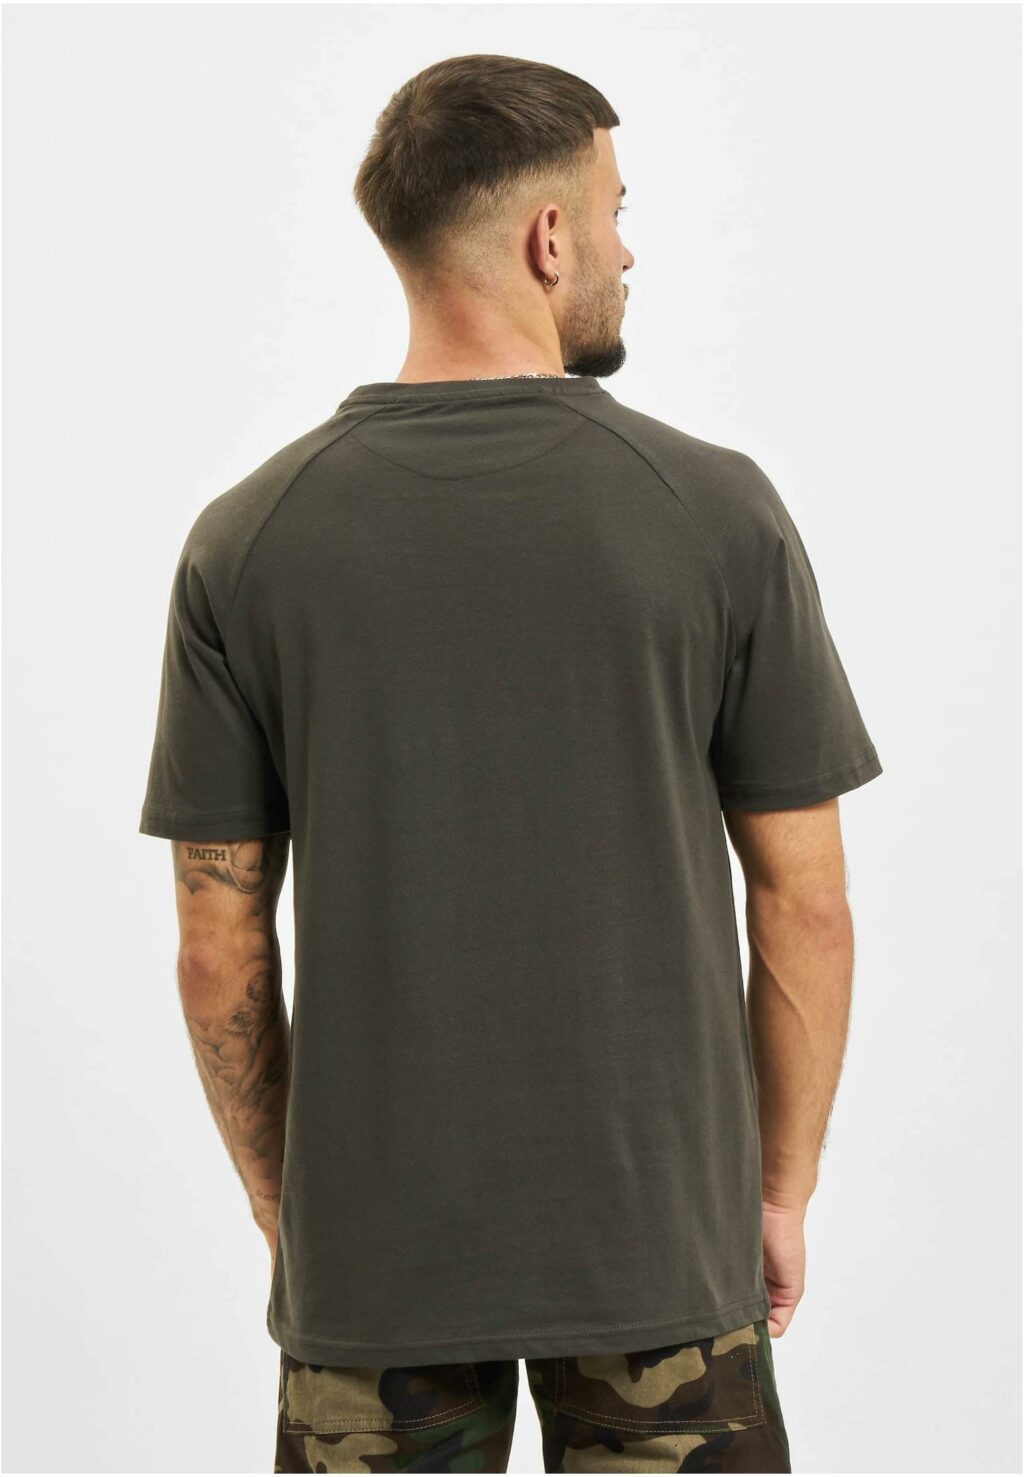 Kai T-Shirt olive DFTS142